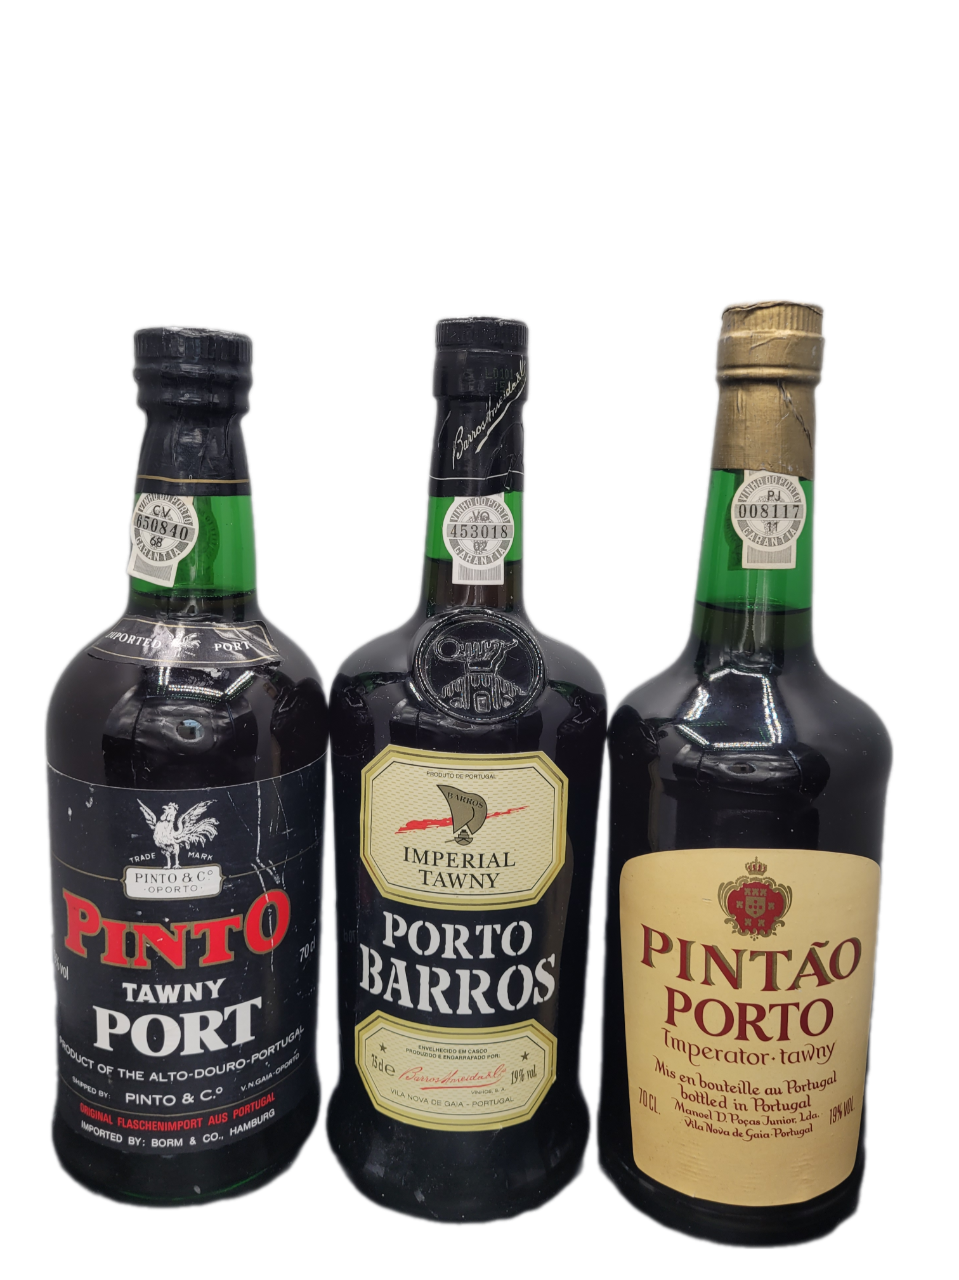 Vinho do Porto: Pinto Tawny Port 19% VOL. (1x0,70ltr.) & Porto Barros 19% VOL. (1x0,75ltr.) & Pintao Port 19% VOL. (1x0,70ltr.) SET